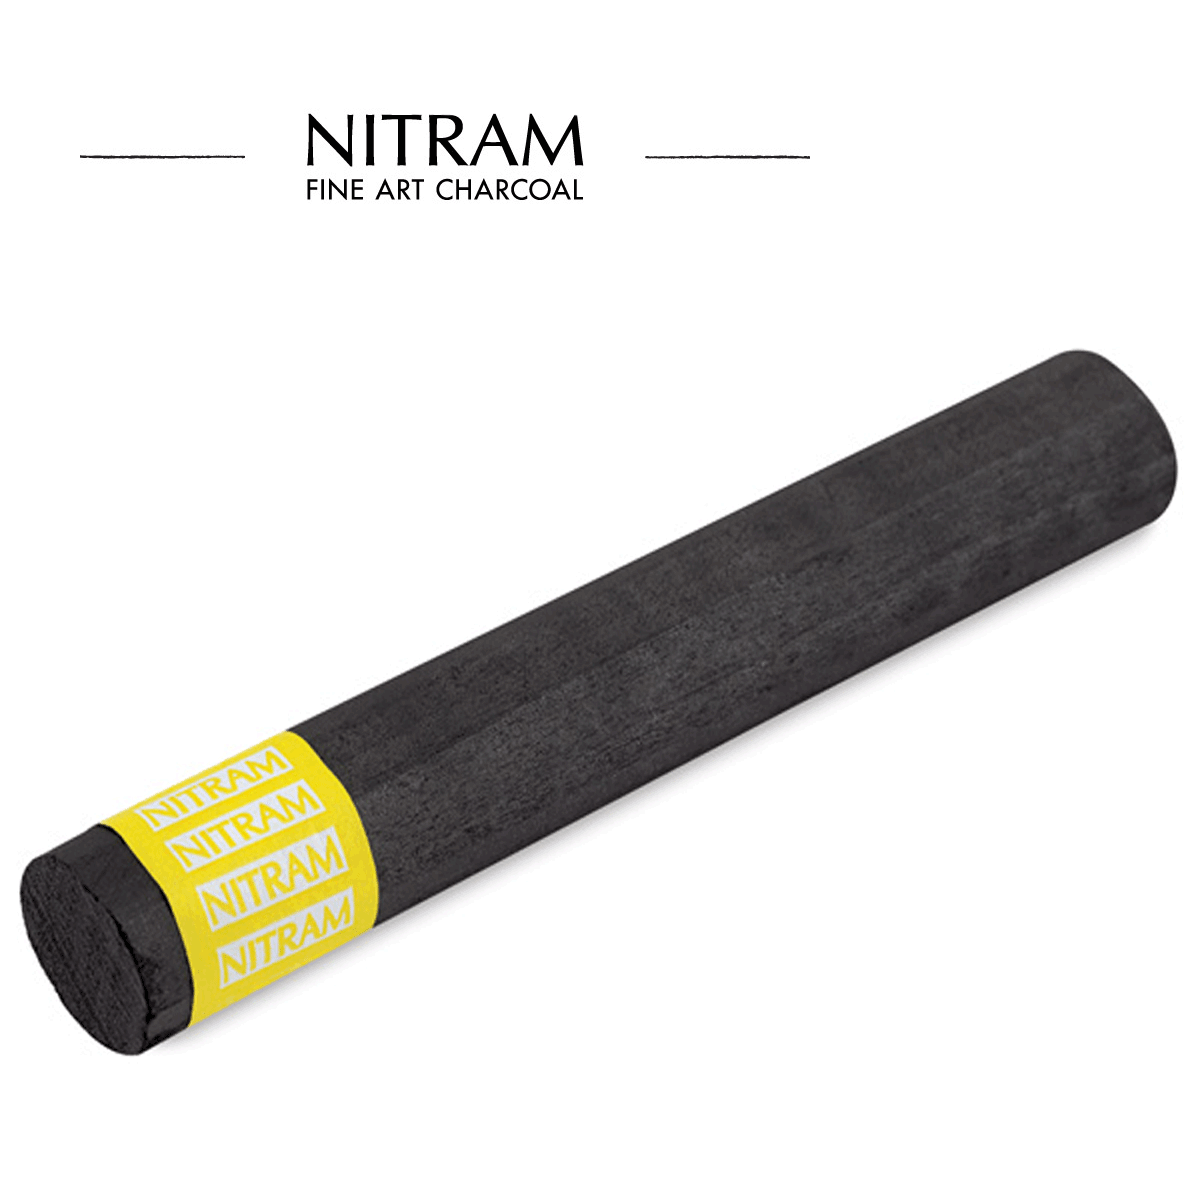 Nitram Charcoal Demi bâton de saule (Extra Soft) 25 mm